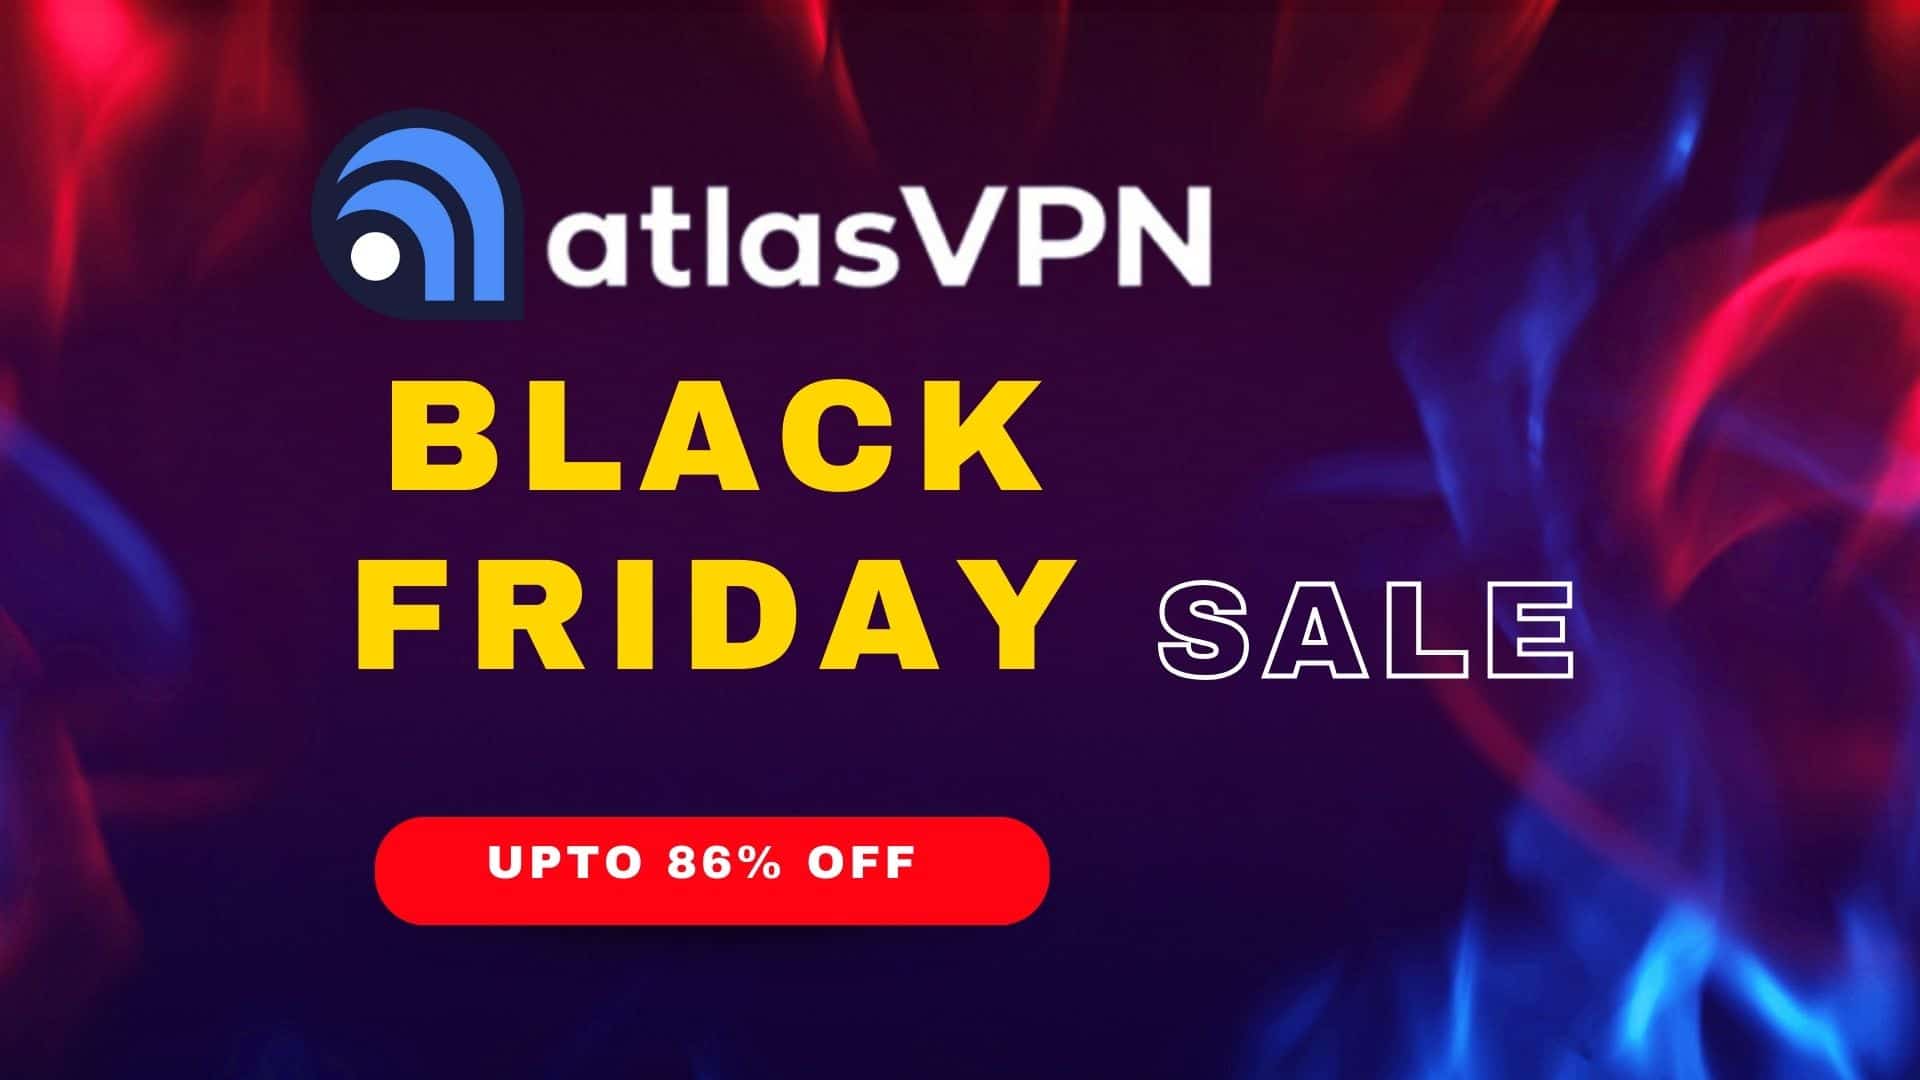 atlasvpn black friday sale